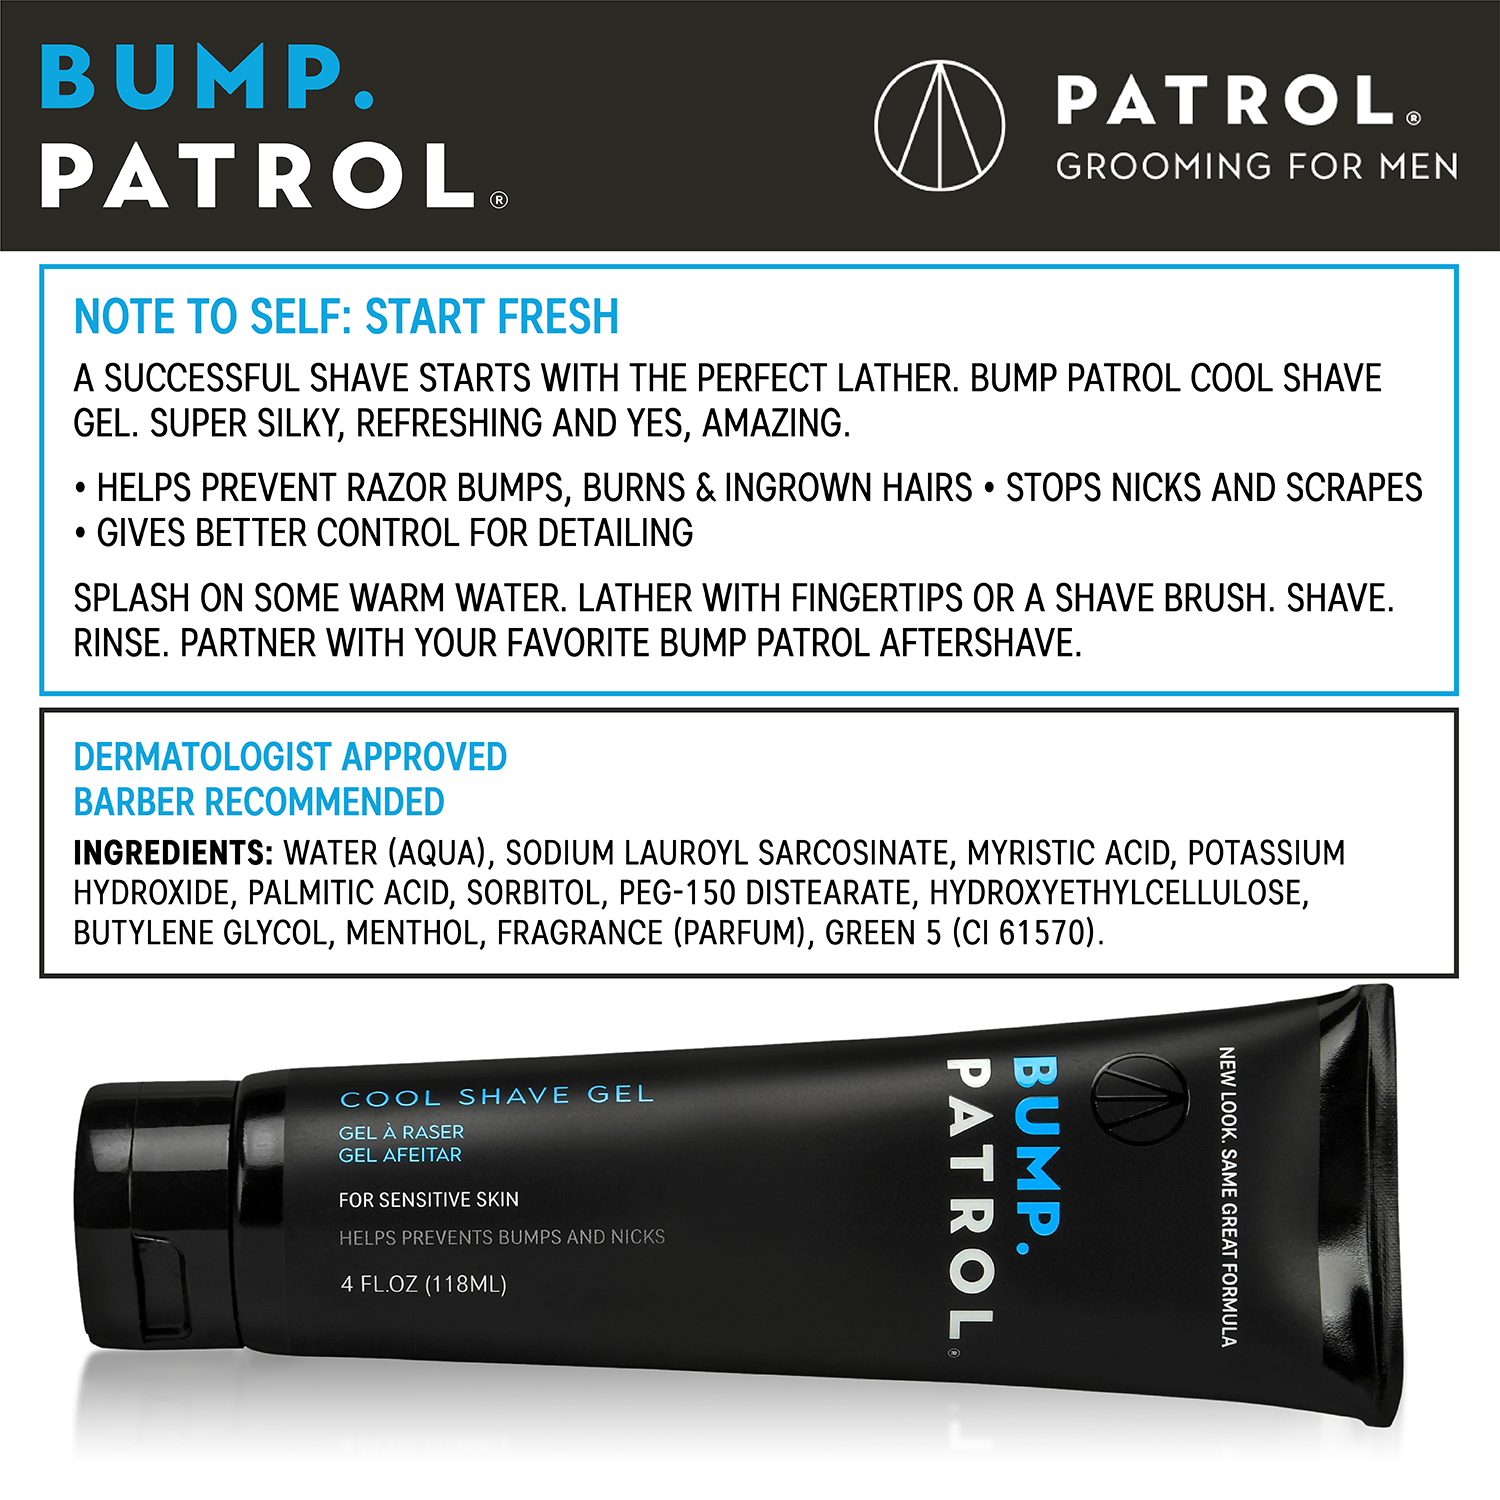 Bump Patrol Cool Shave Gel with Menthol for Sensitive Skin (4 oz) - image 2 of 5